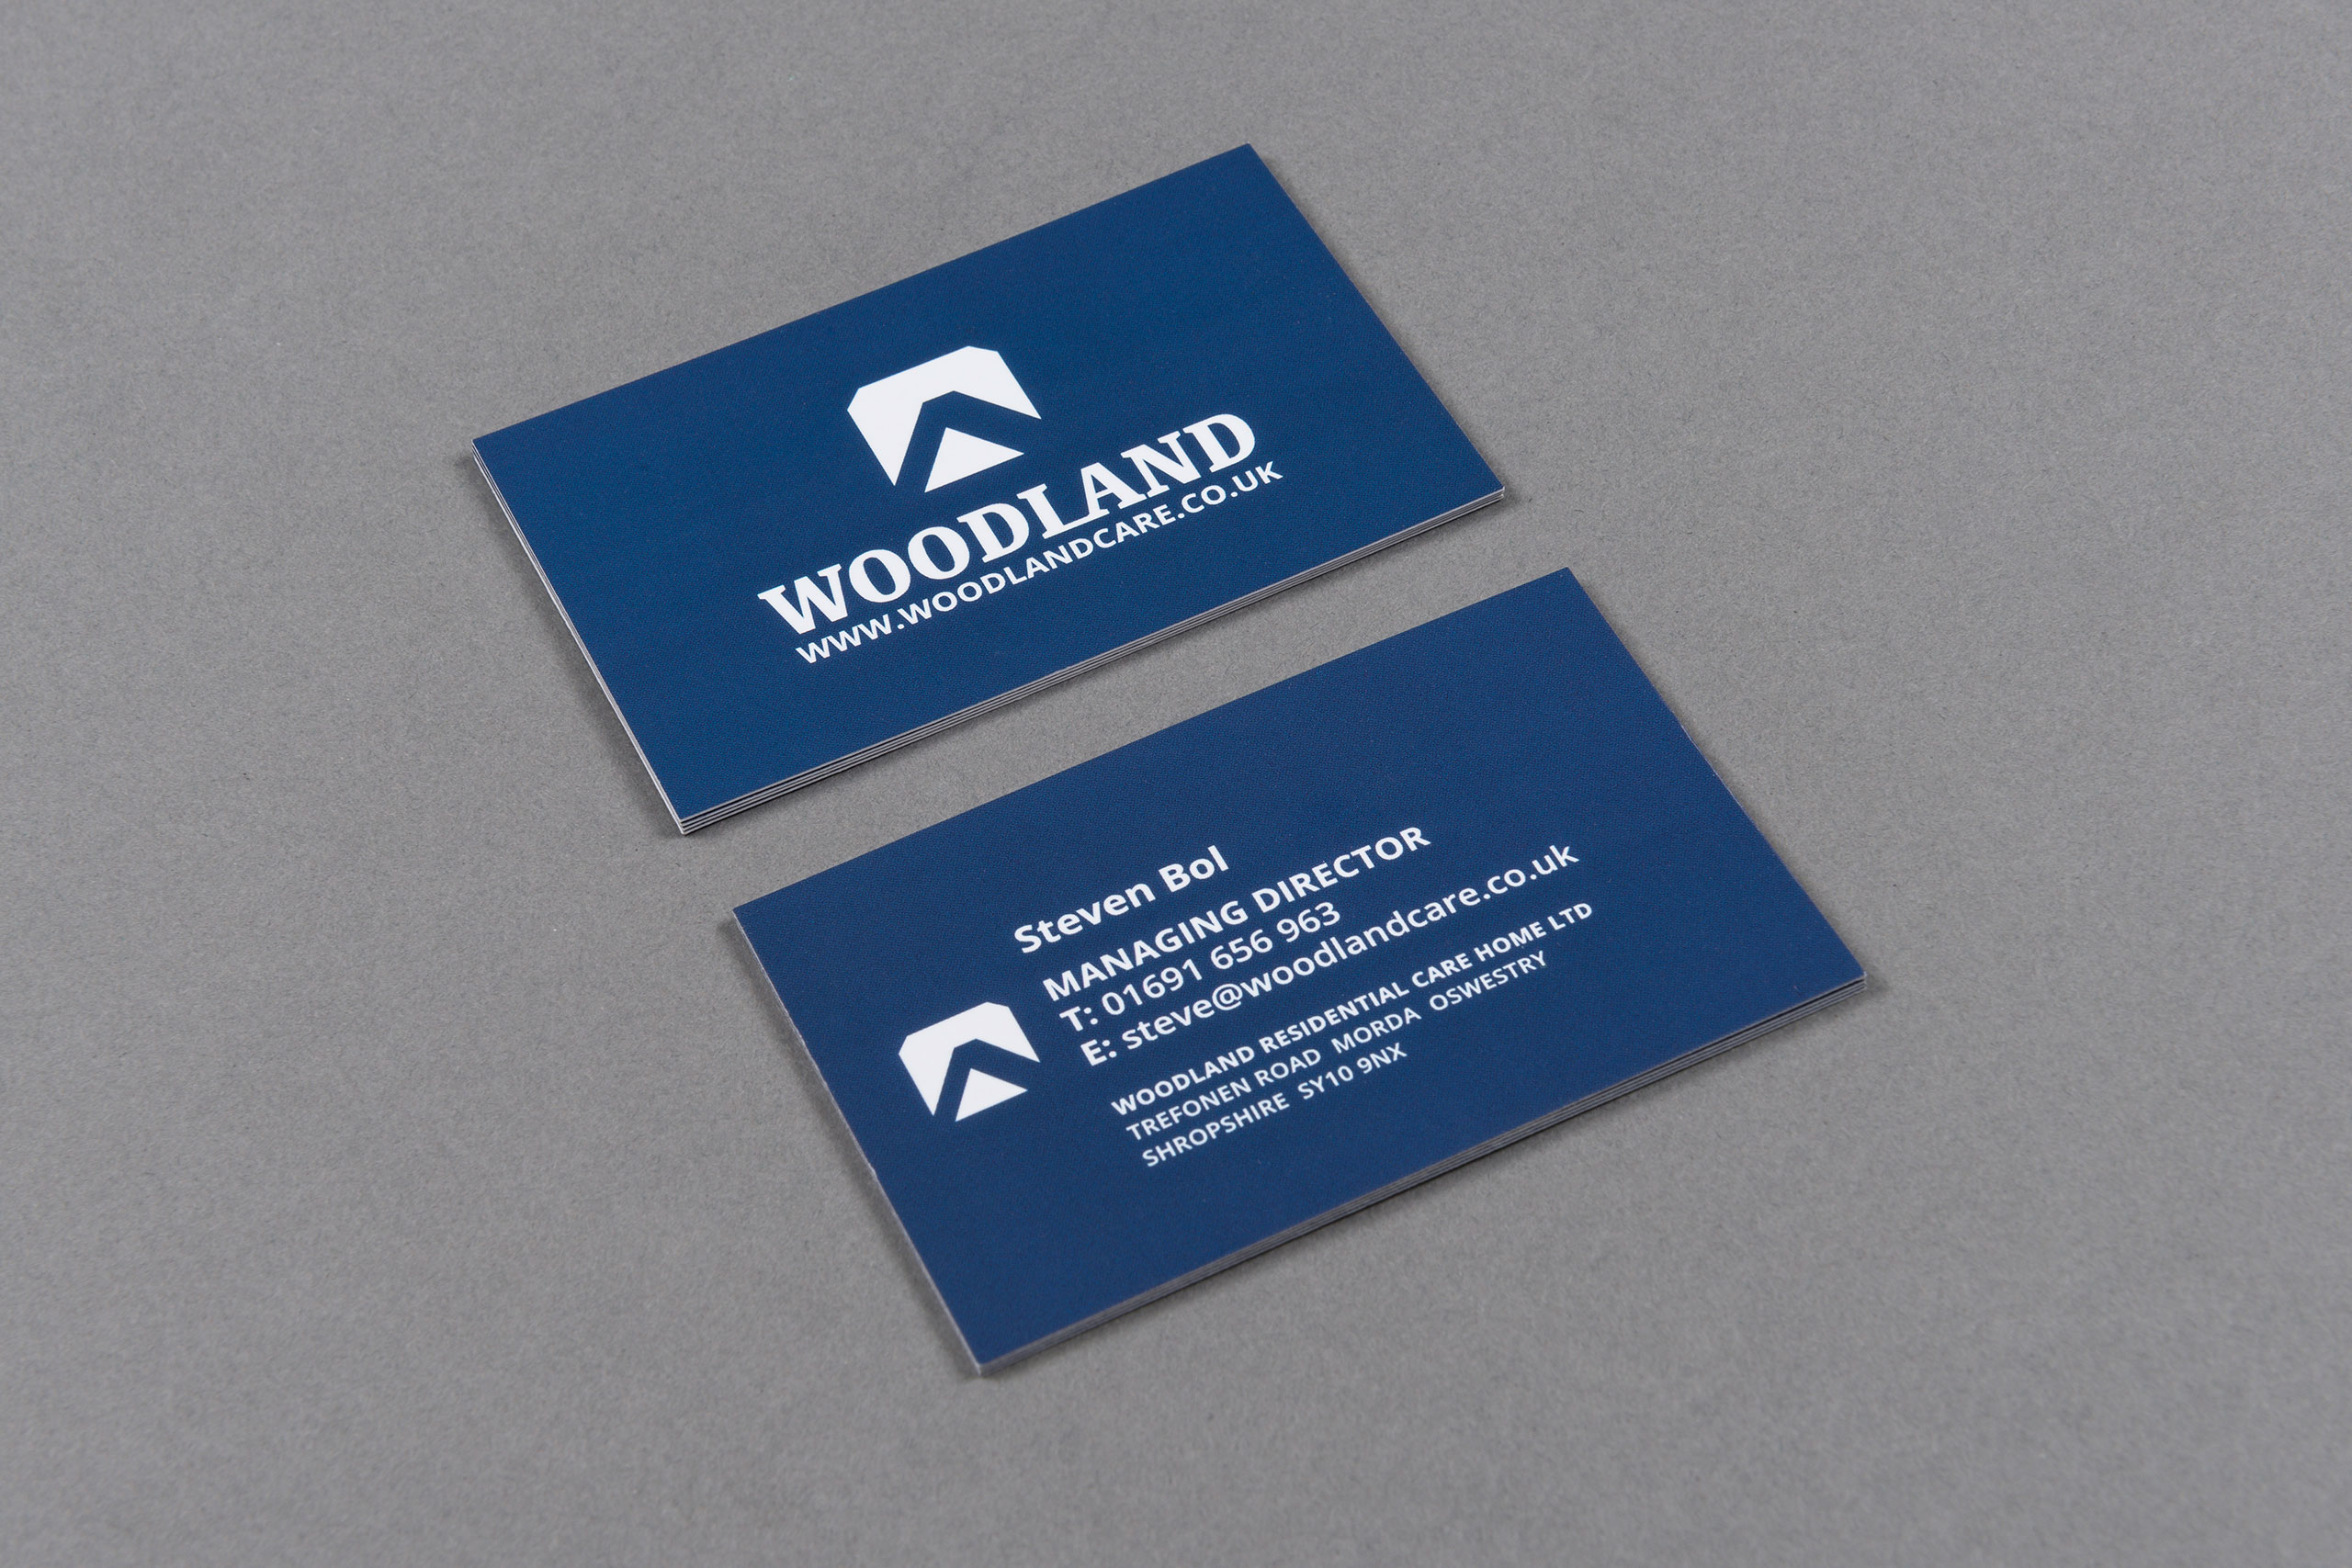 Woodland Care